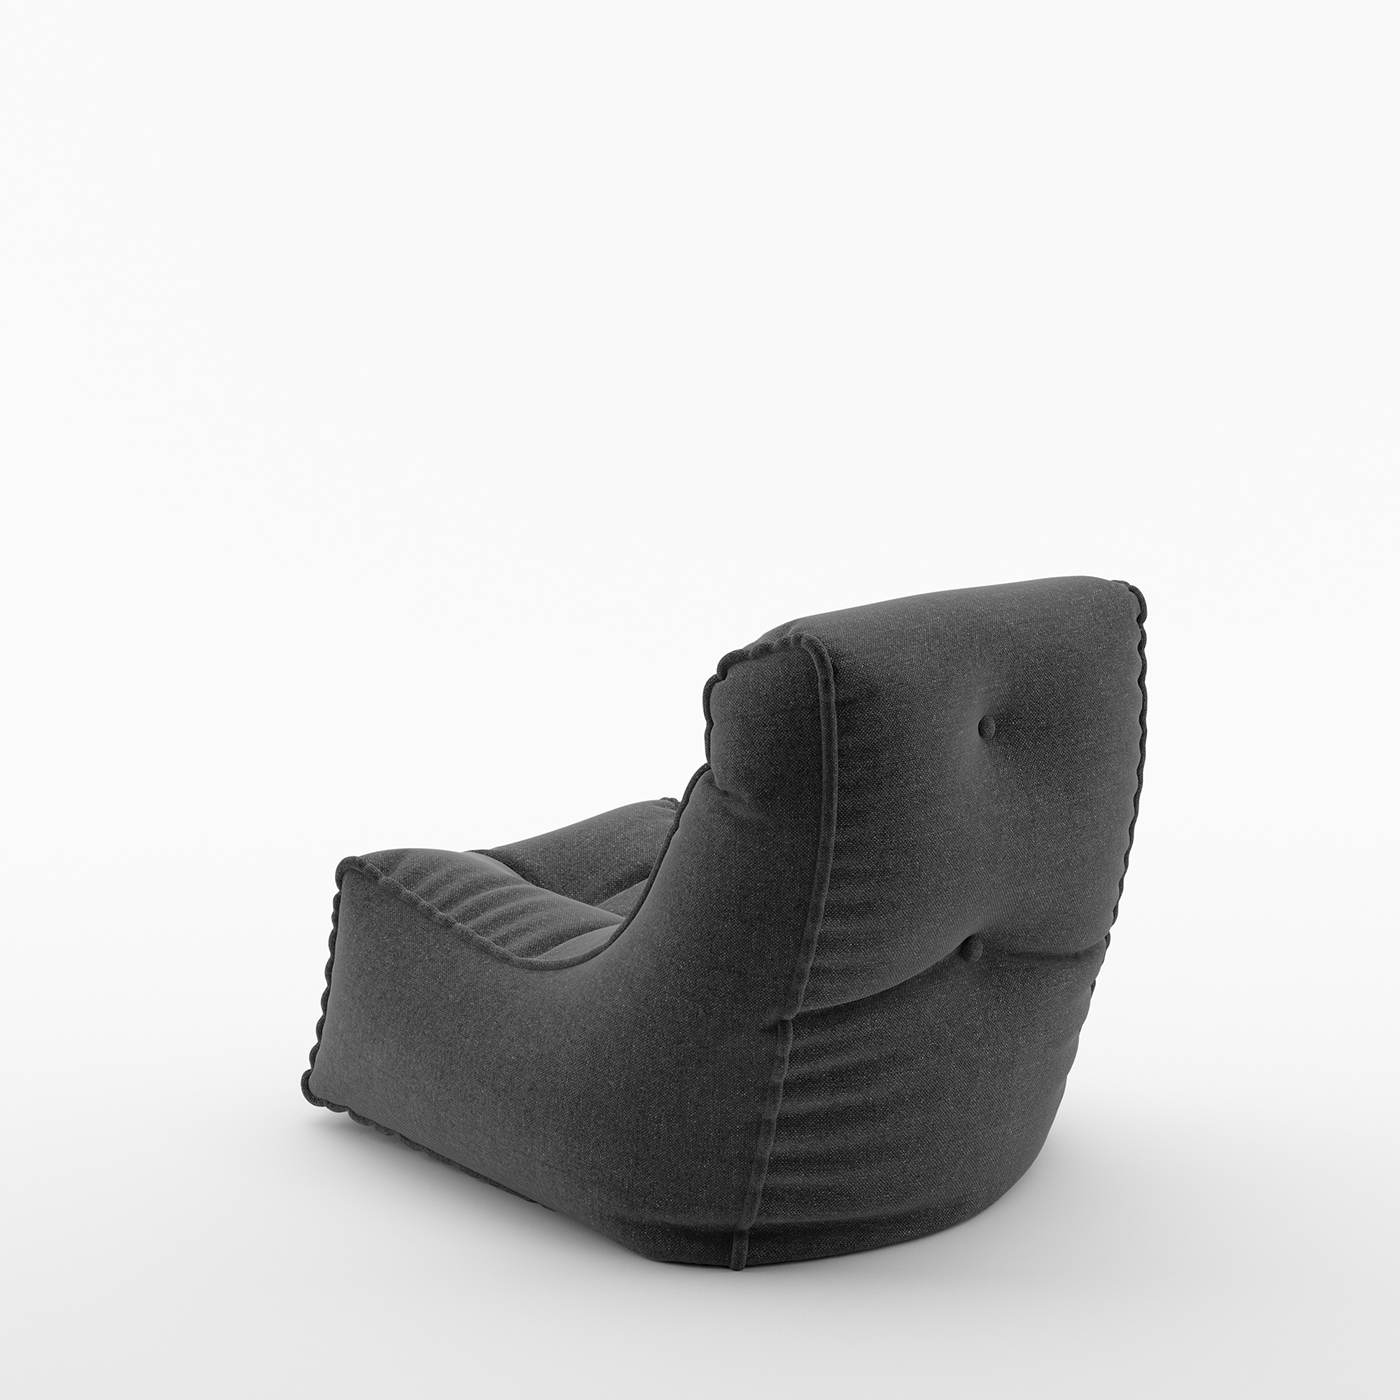 pouf 3D model free FREE 3d model free 3d furniture sofa cushion